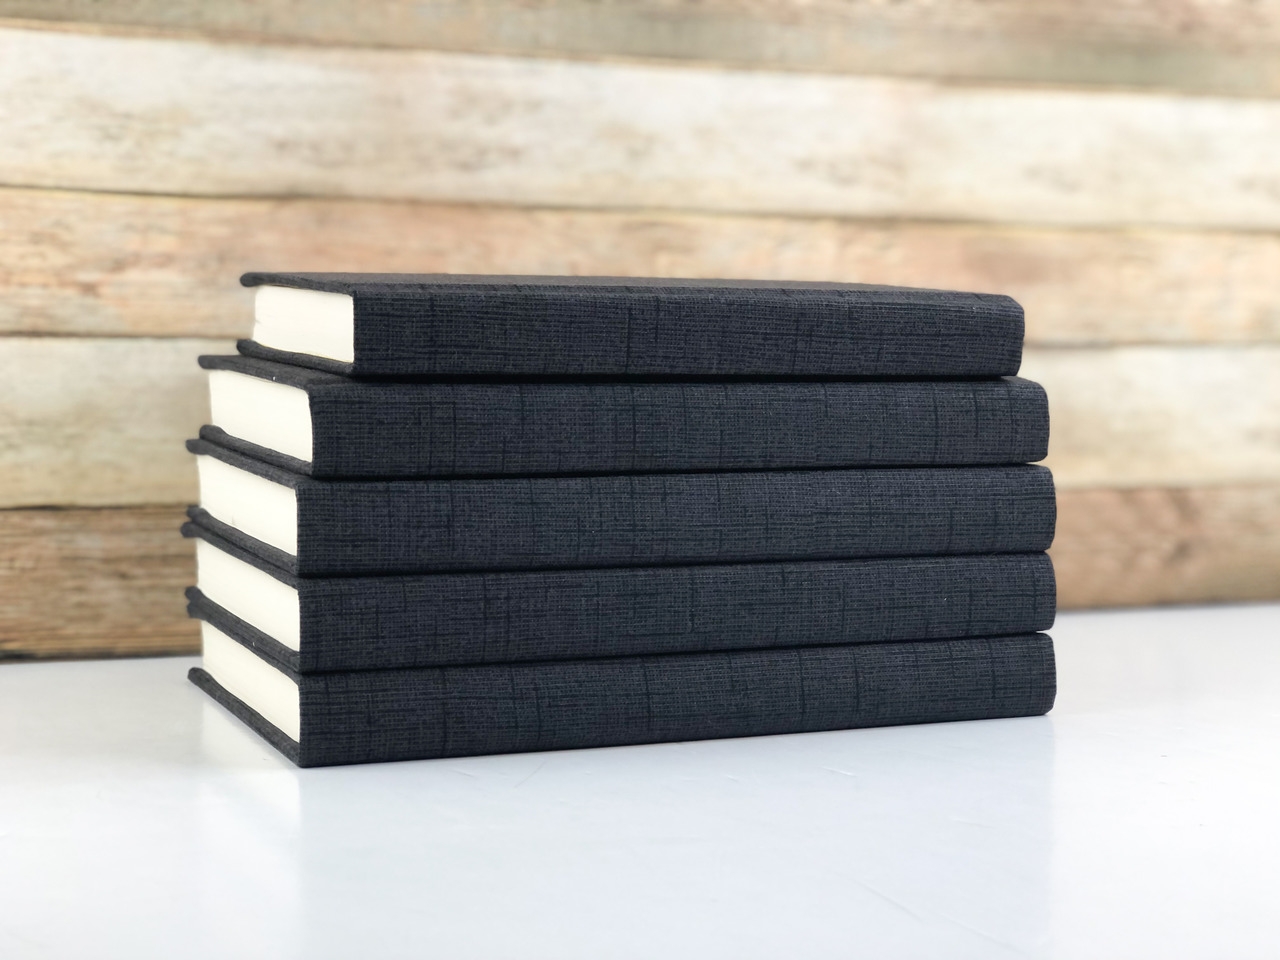 Decorative Books, Textured Black, Set of 5 - Image 1